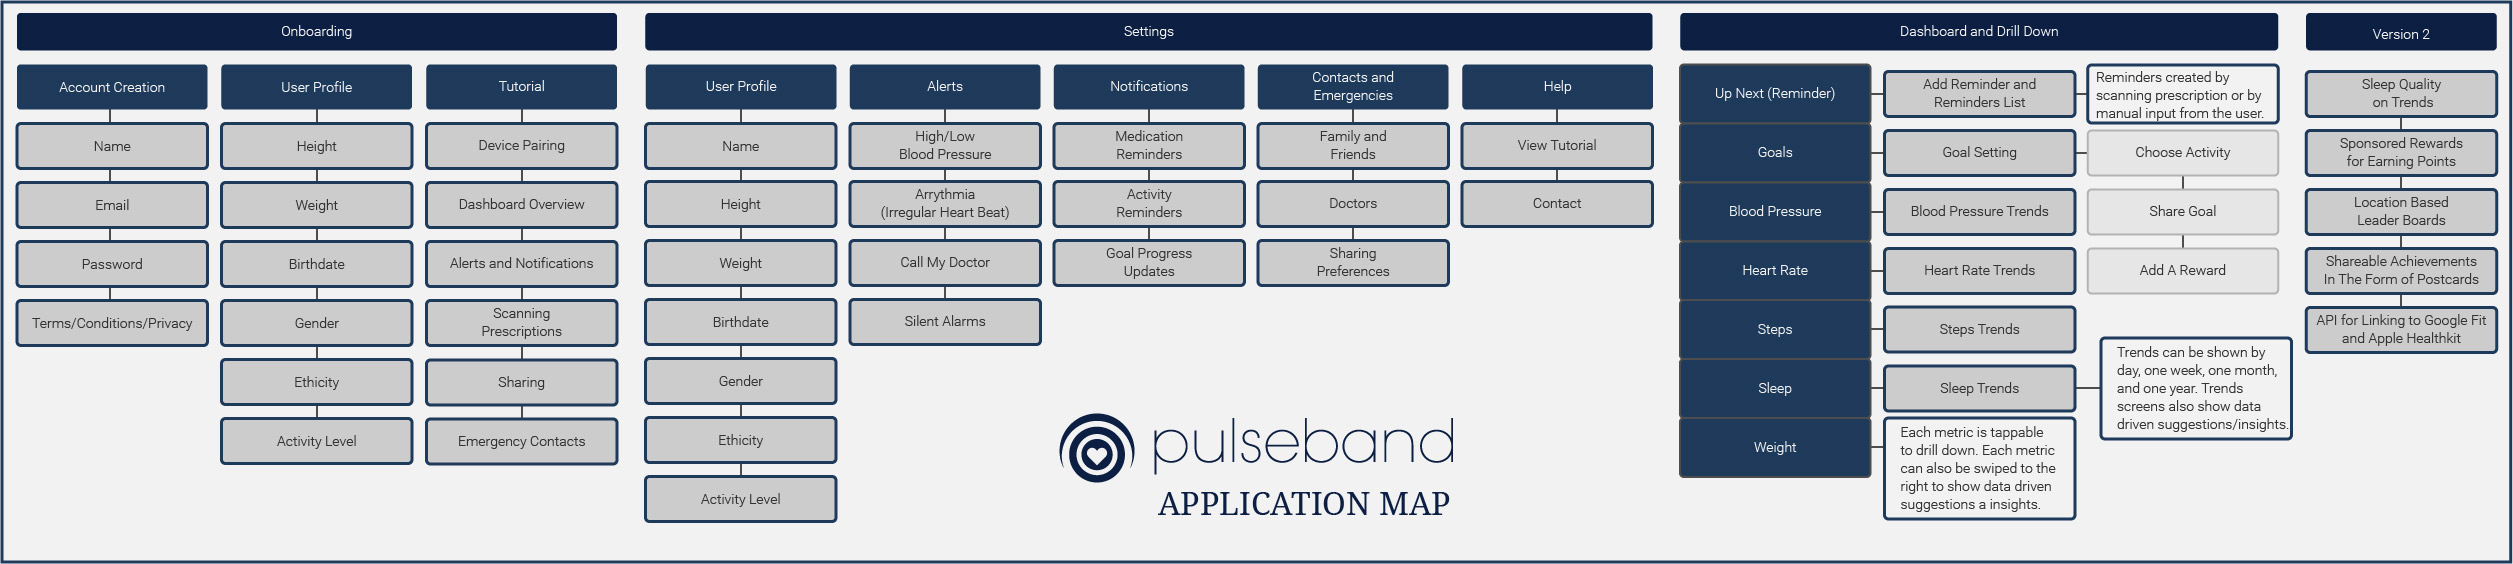 Pulseband Application Map